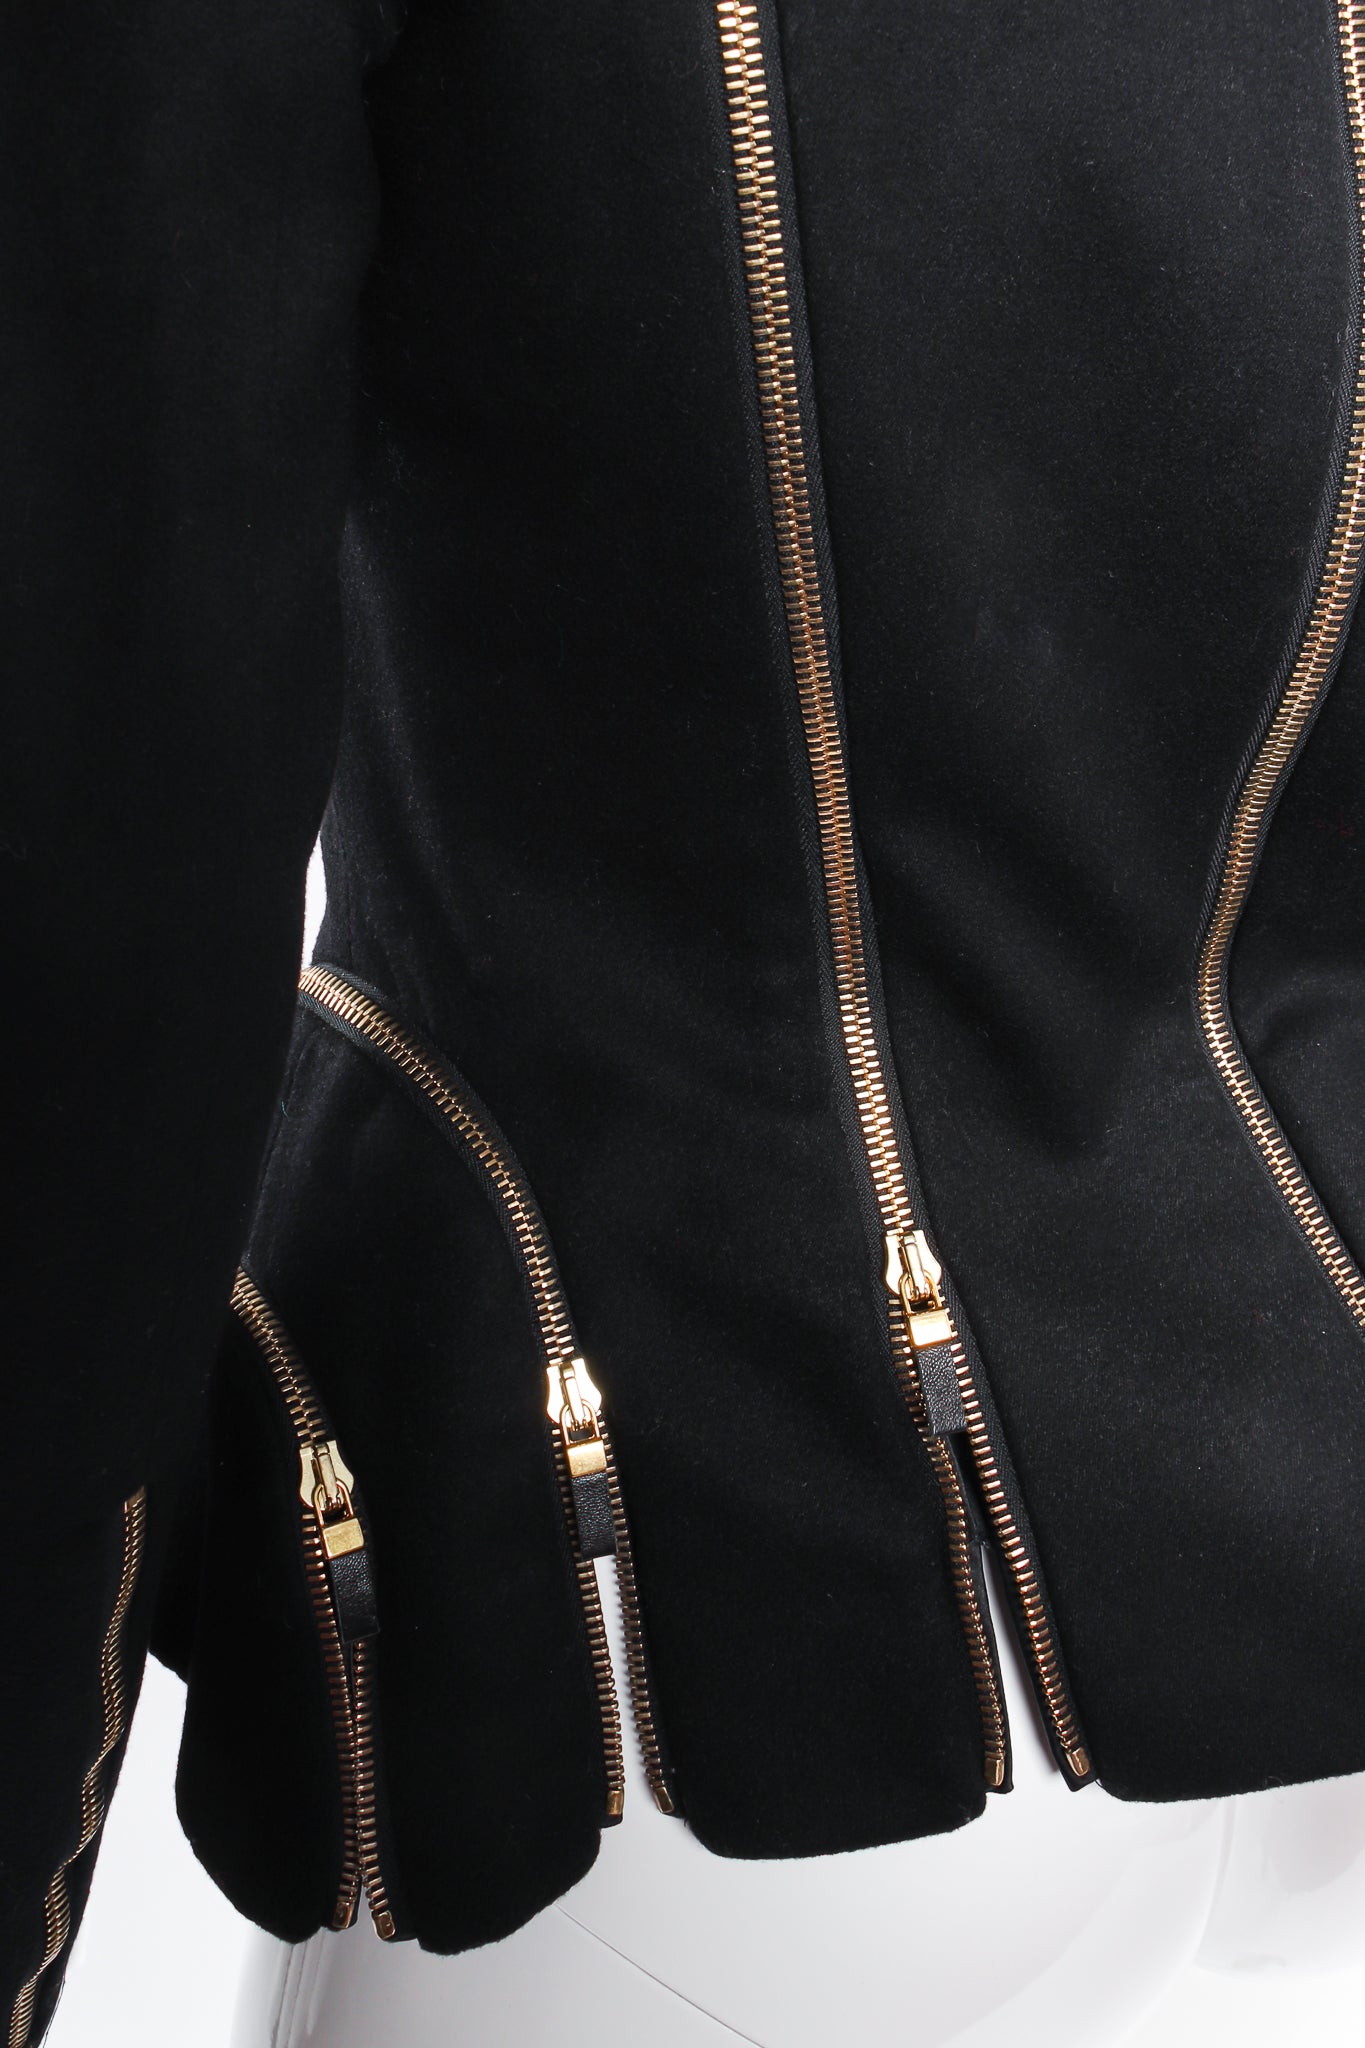 Vintage Alexander McQueen Zipper Bustle Jacket back detail at Recess Los Angeles